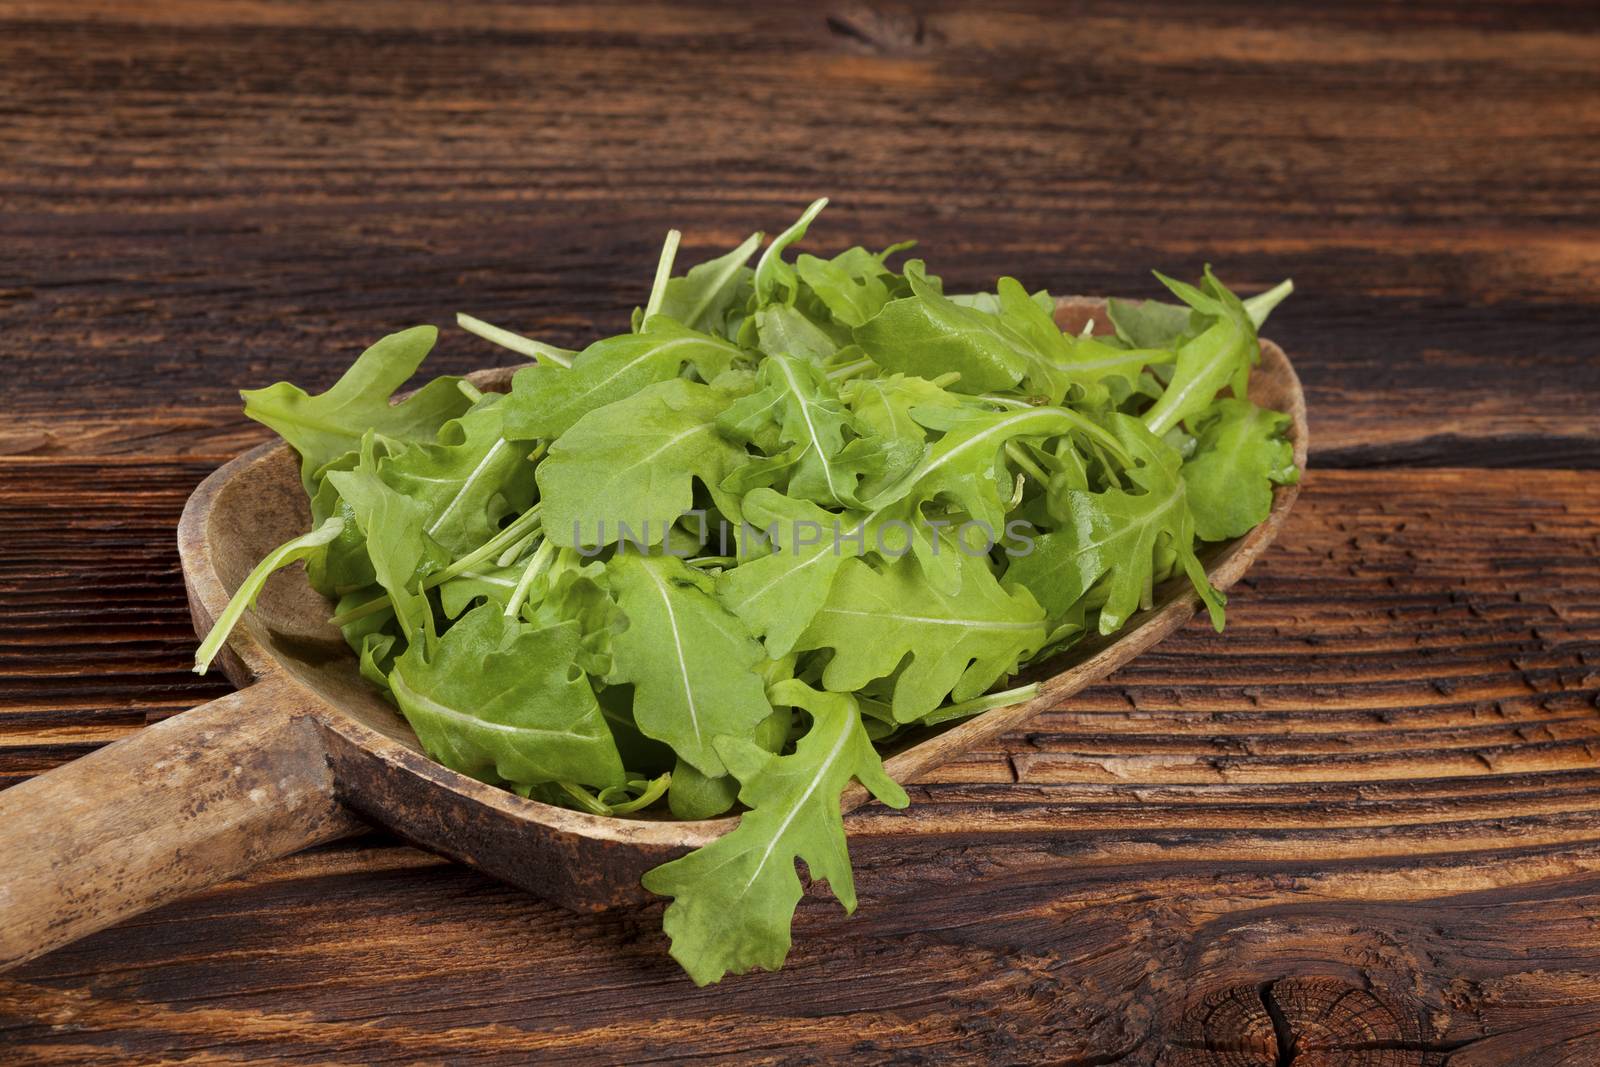 Fresh arugula salad on wooden spoon on wooden table. Healthy green salad eating. 